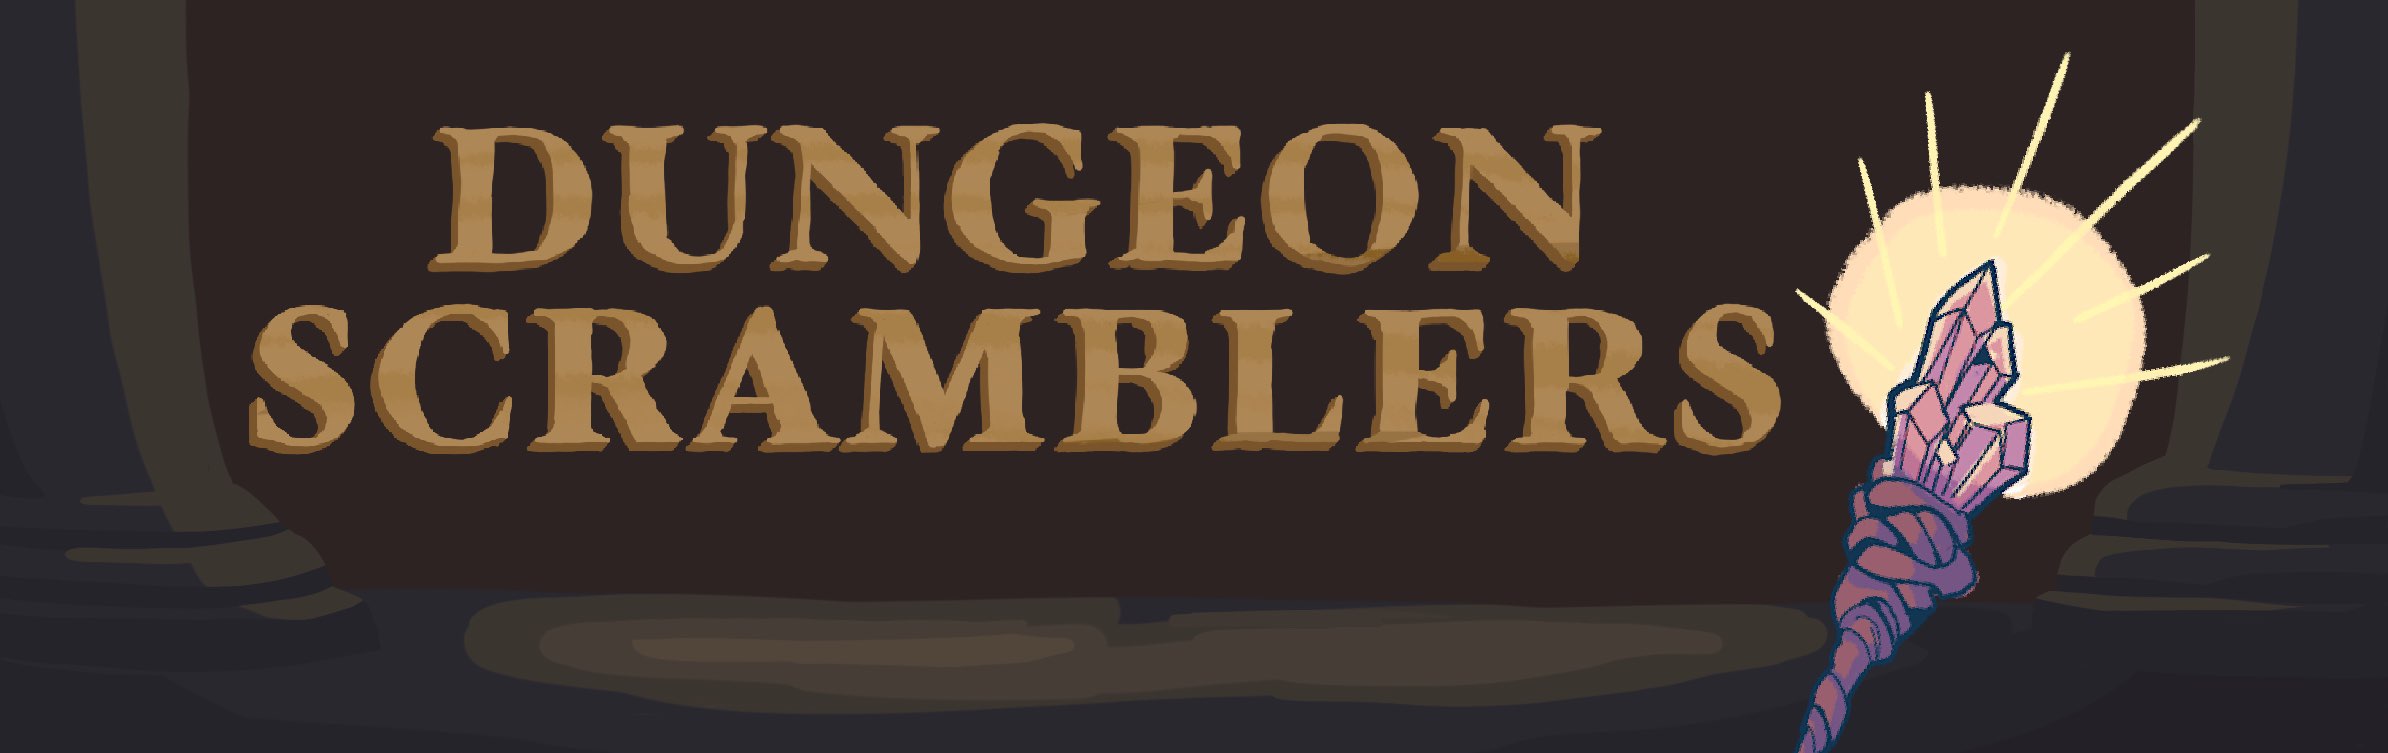 Dungeon Scramblers